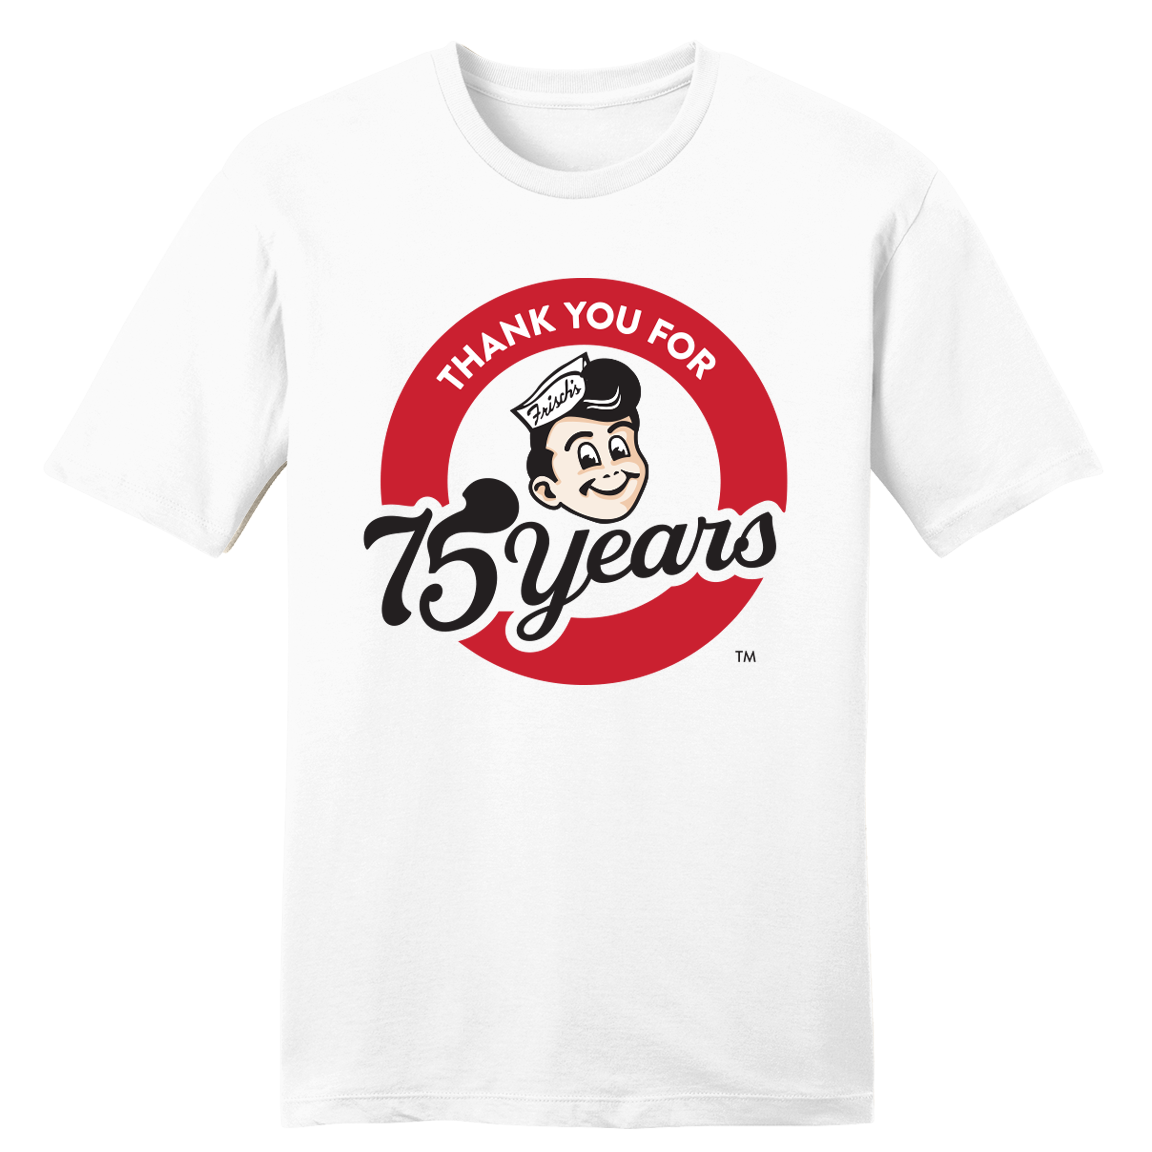 Frisch's 75 Years - Cincy Shirts